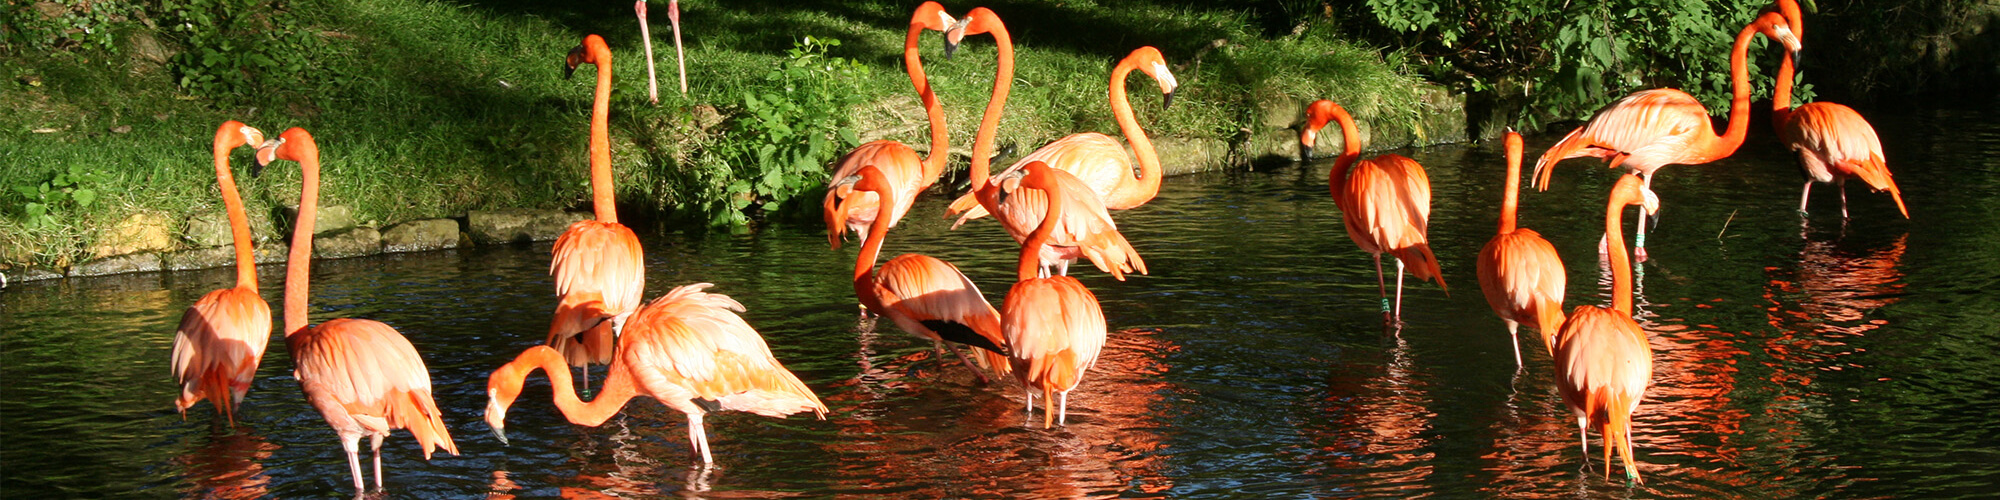 Flamingo Prtfolio